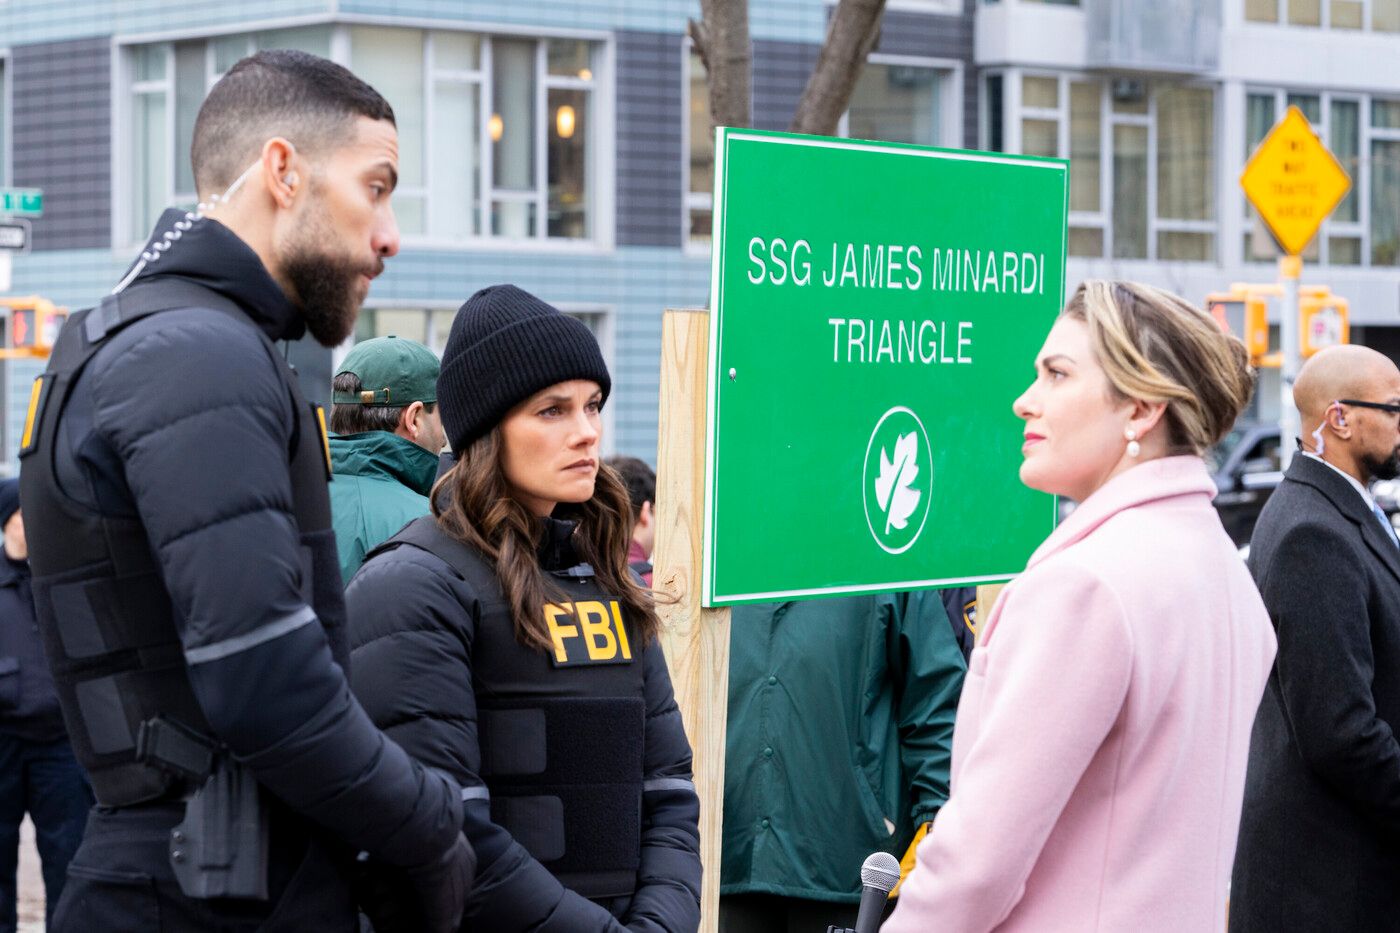 OA (actor Zeeko Zaki) and Maggie (Missy Peregrym) speak to a politician in a pink coat on FBI